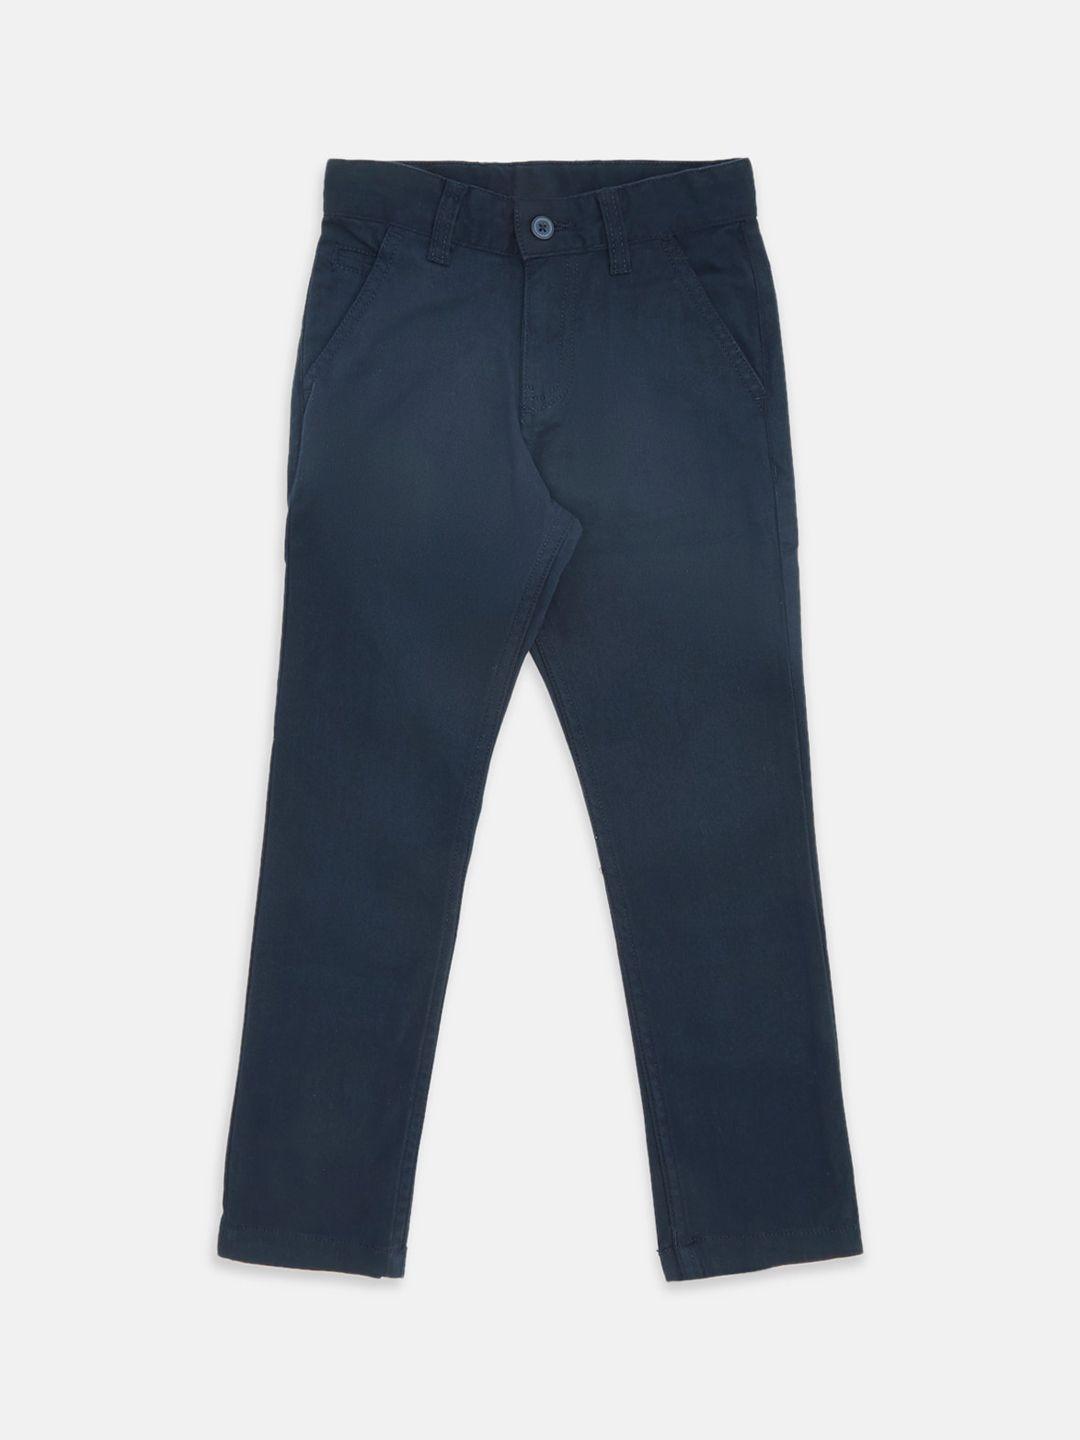 pantaloons junior boys chinos cotton trousers